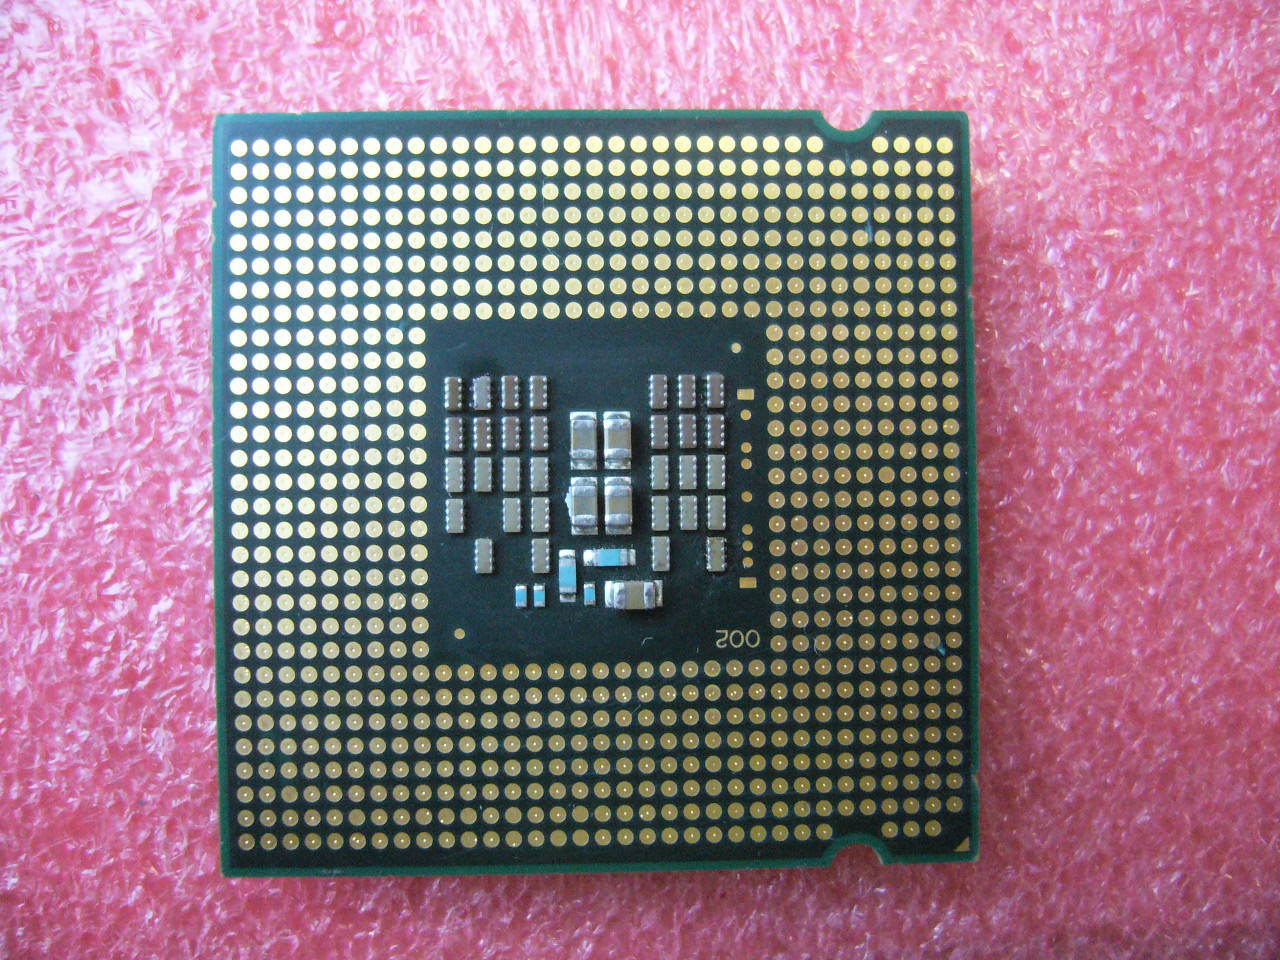 QTY 1x INTEL Core2 Quad Q8400 CPU 2.66GHz/4MB/1333Mhz LGA775 SLGT6 - Click Image to Close